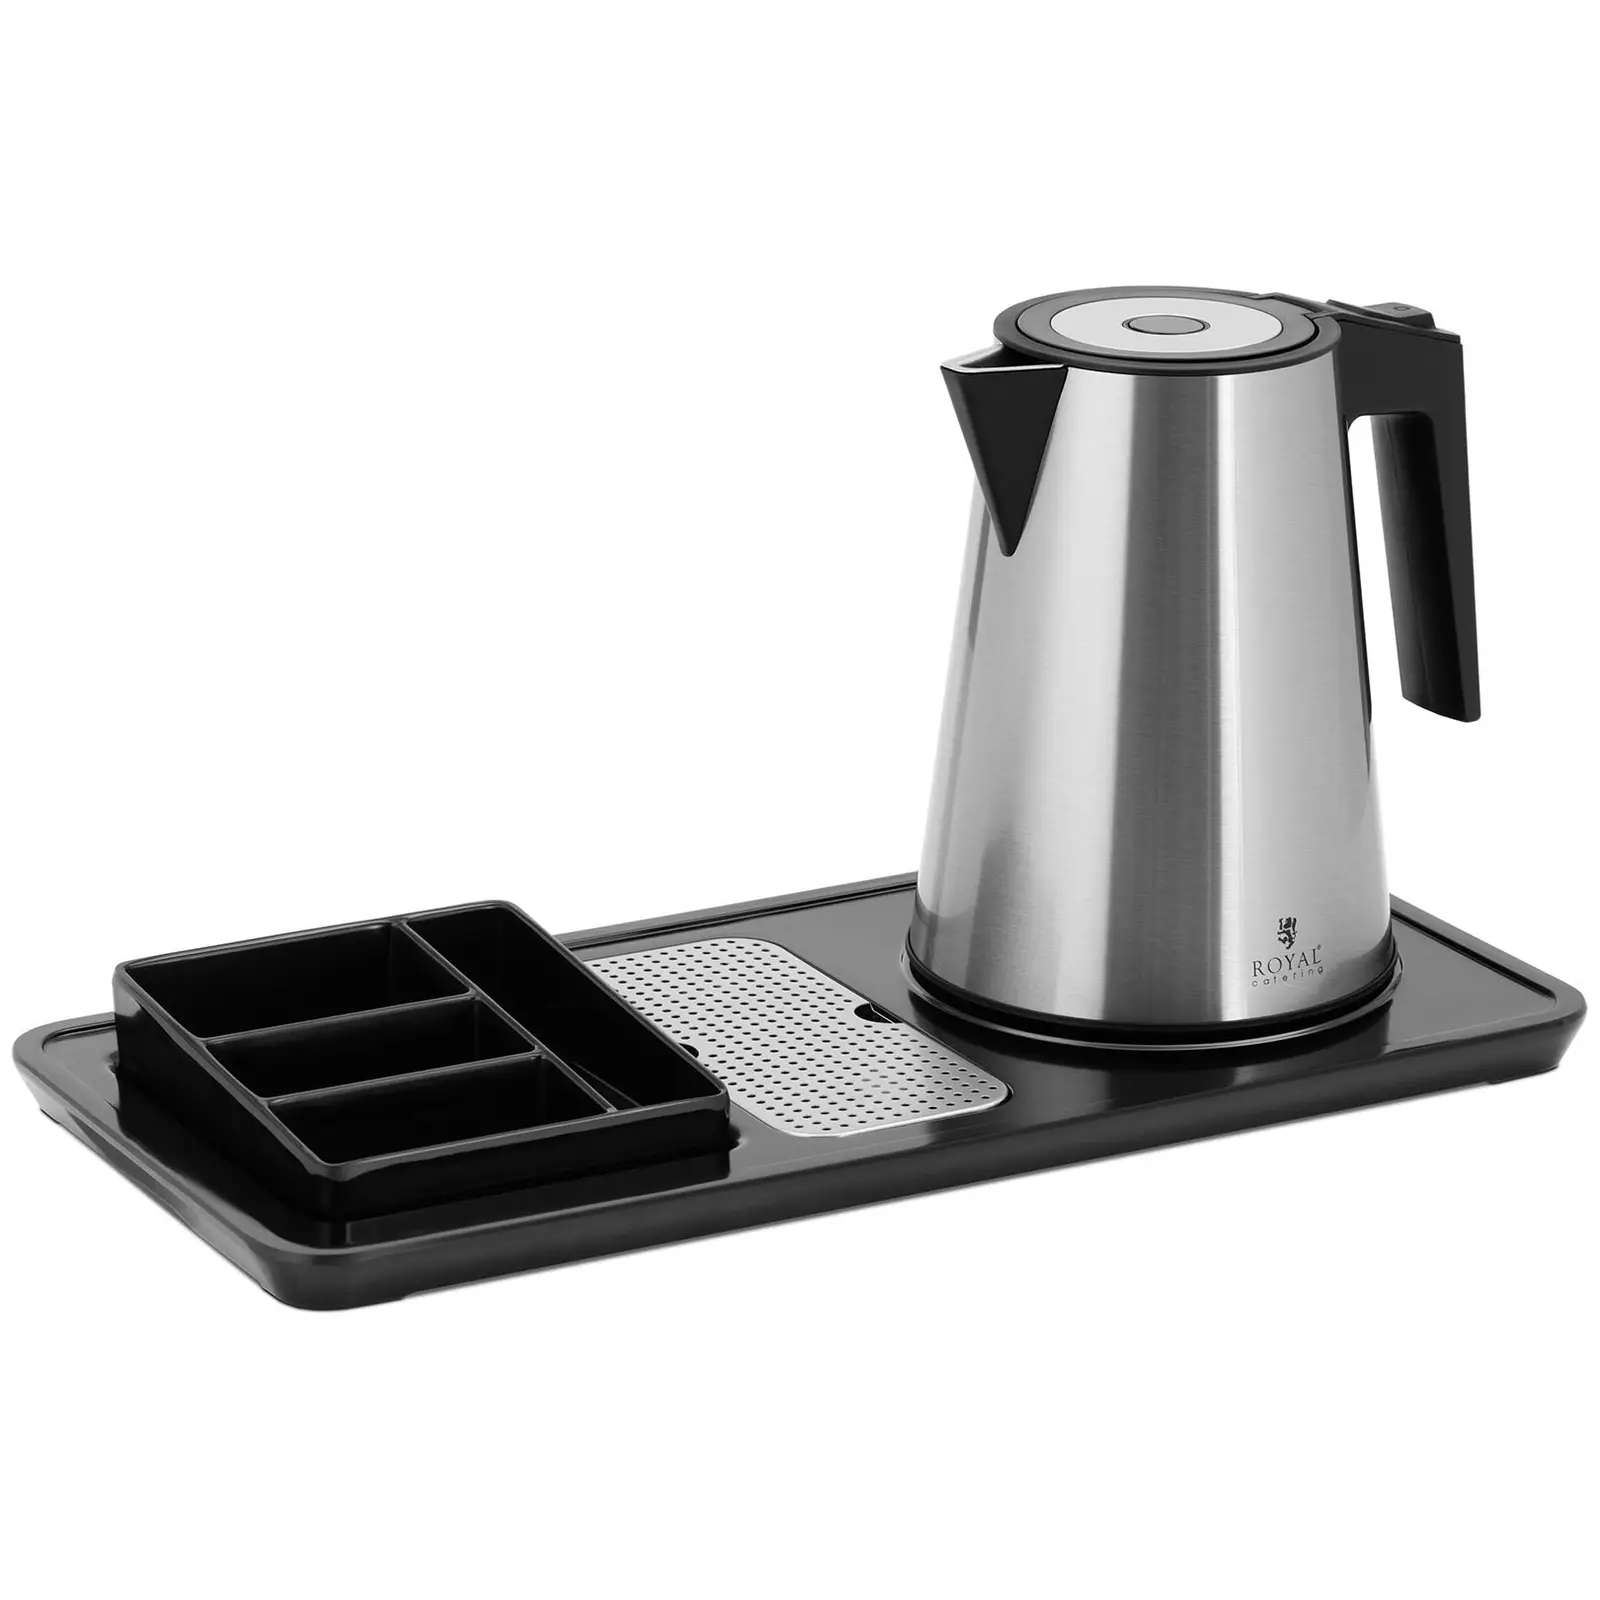 Wasserkocher - Kaffee- und Teestation - 1,2 L - 1800 W - silbern - Royal Catering 